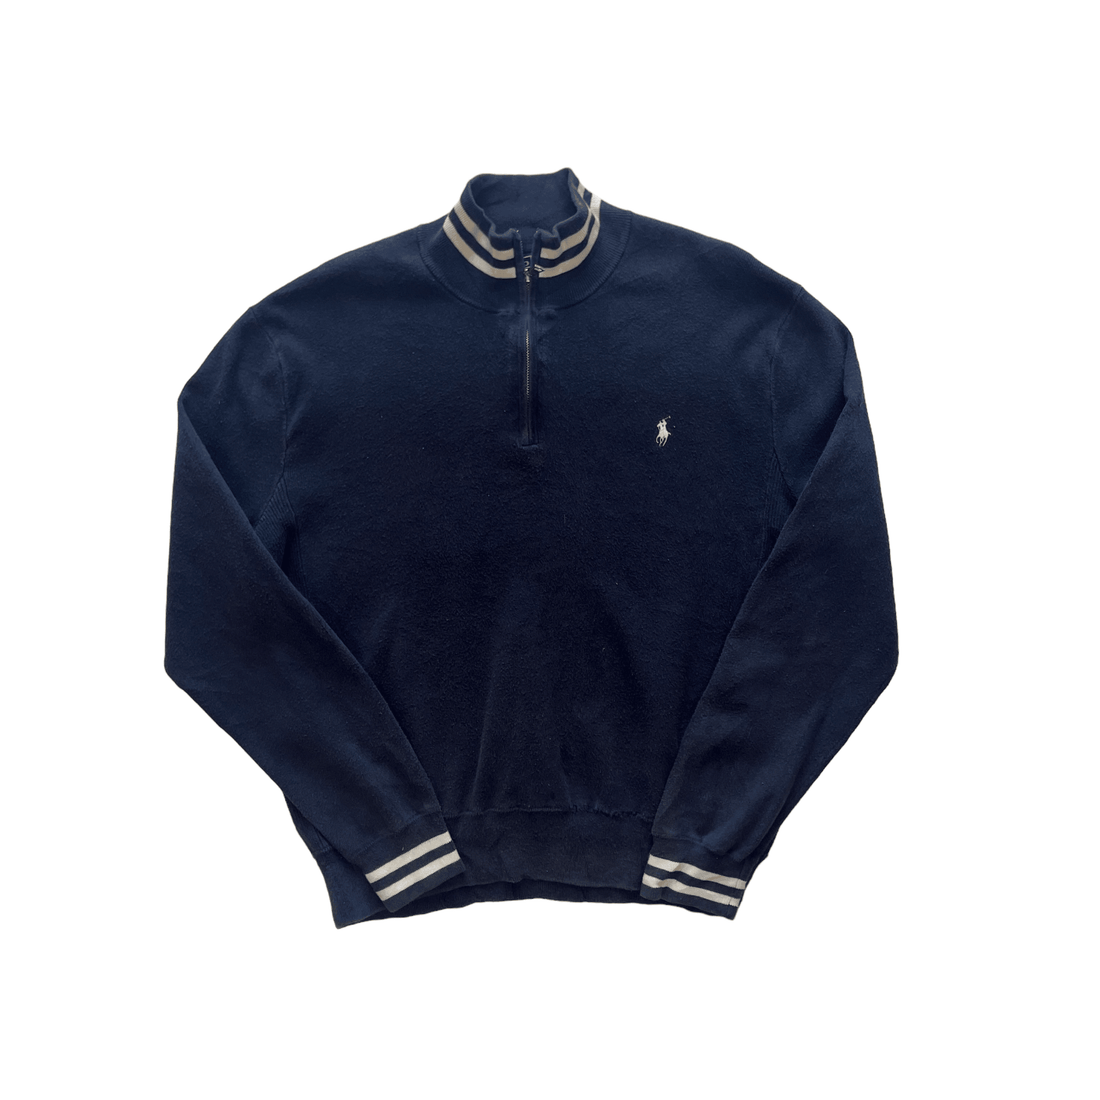 Vintage 90s Blue Polo Ralph Lauren Quarter Zip Sweatshirt - Extra Large (Recommended Size - Large) - The Streetwear Studio